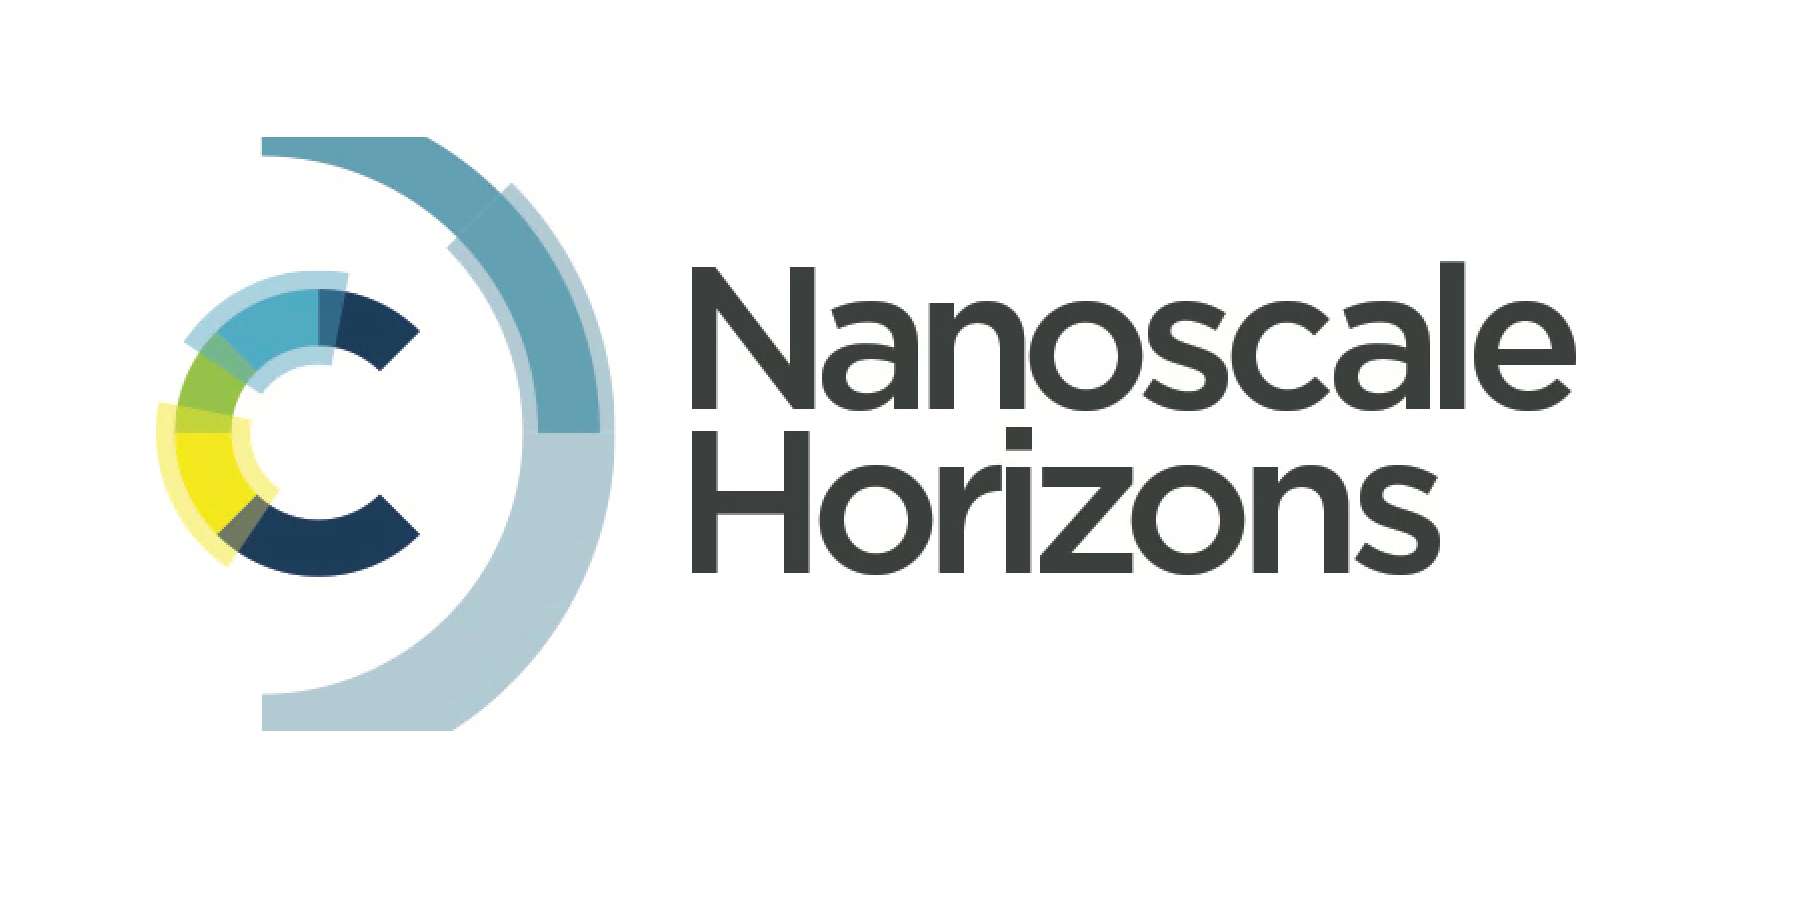 Kanit Hantanasirisakul Paper Among the 5 Most Popular Articles in Nanoscale Horizons Journal in 2020